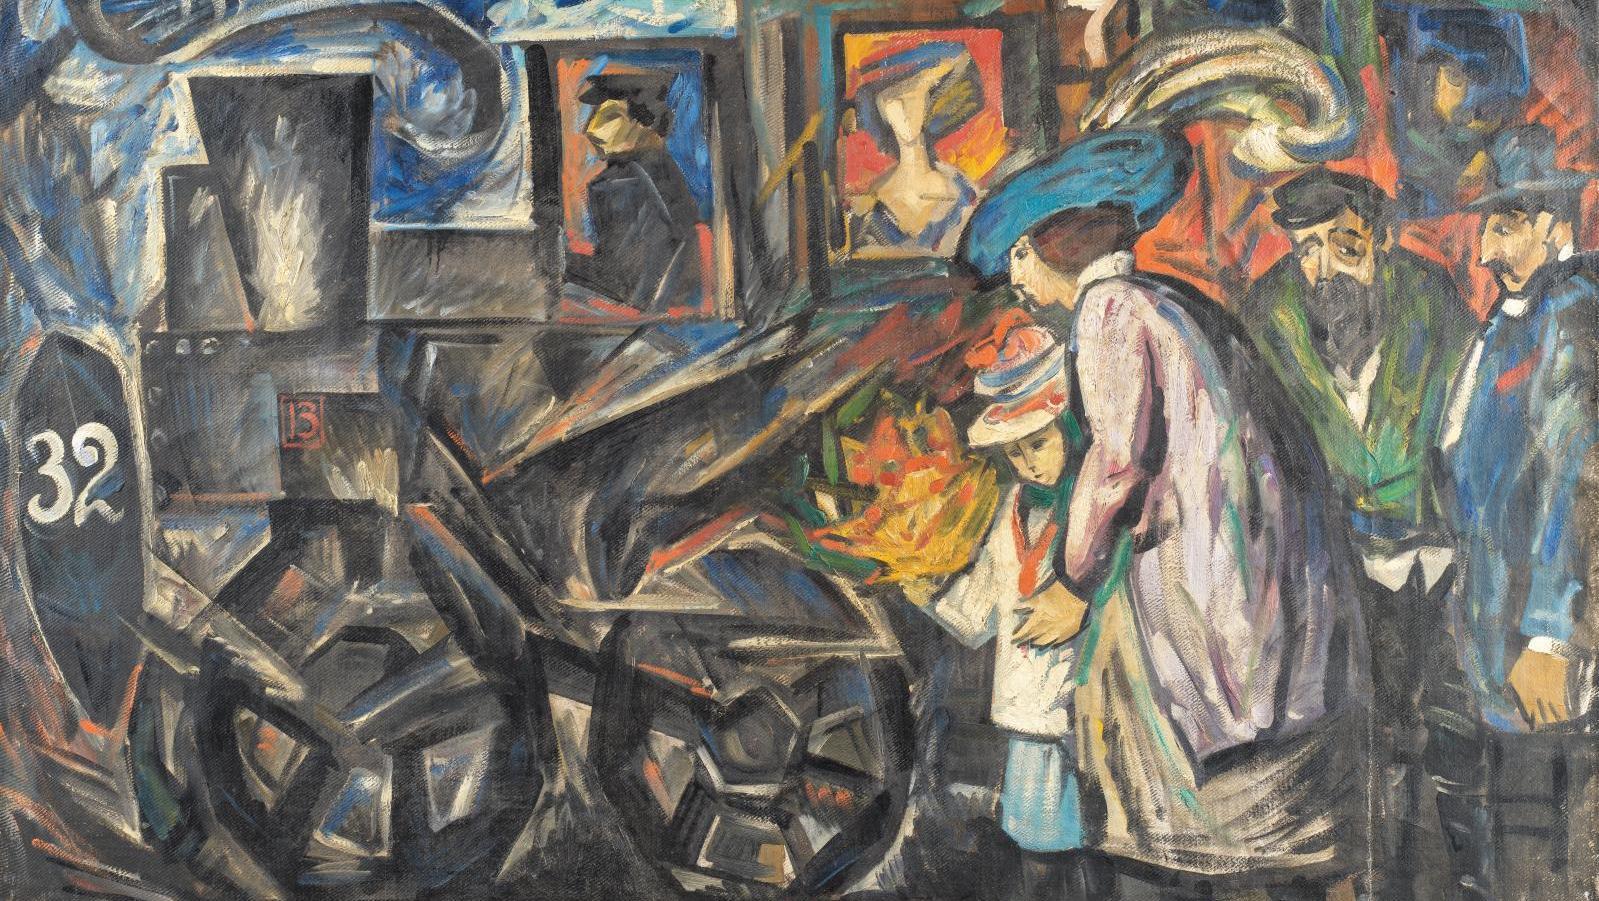 Natalia Gontcharova (1881-1962), La Gare, huile sur toile, vers 1913-1914, 97,5 x 156 cm.... Le choix de Natalia Gontcharova